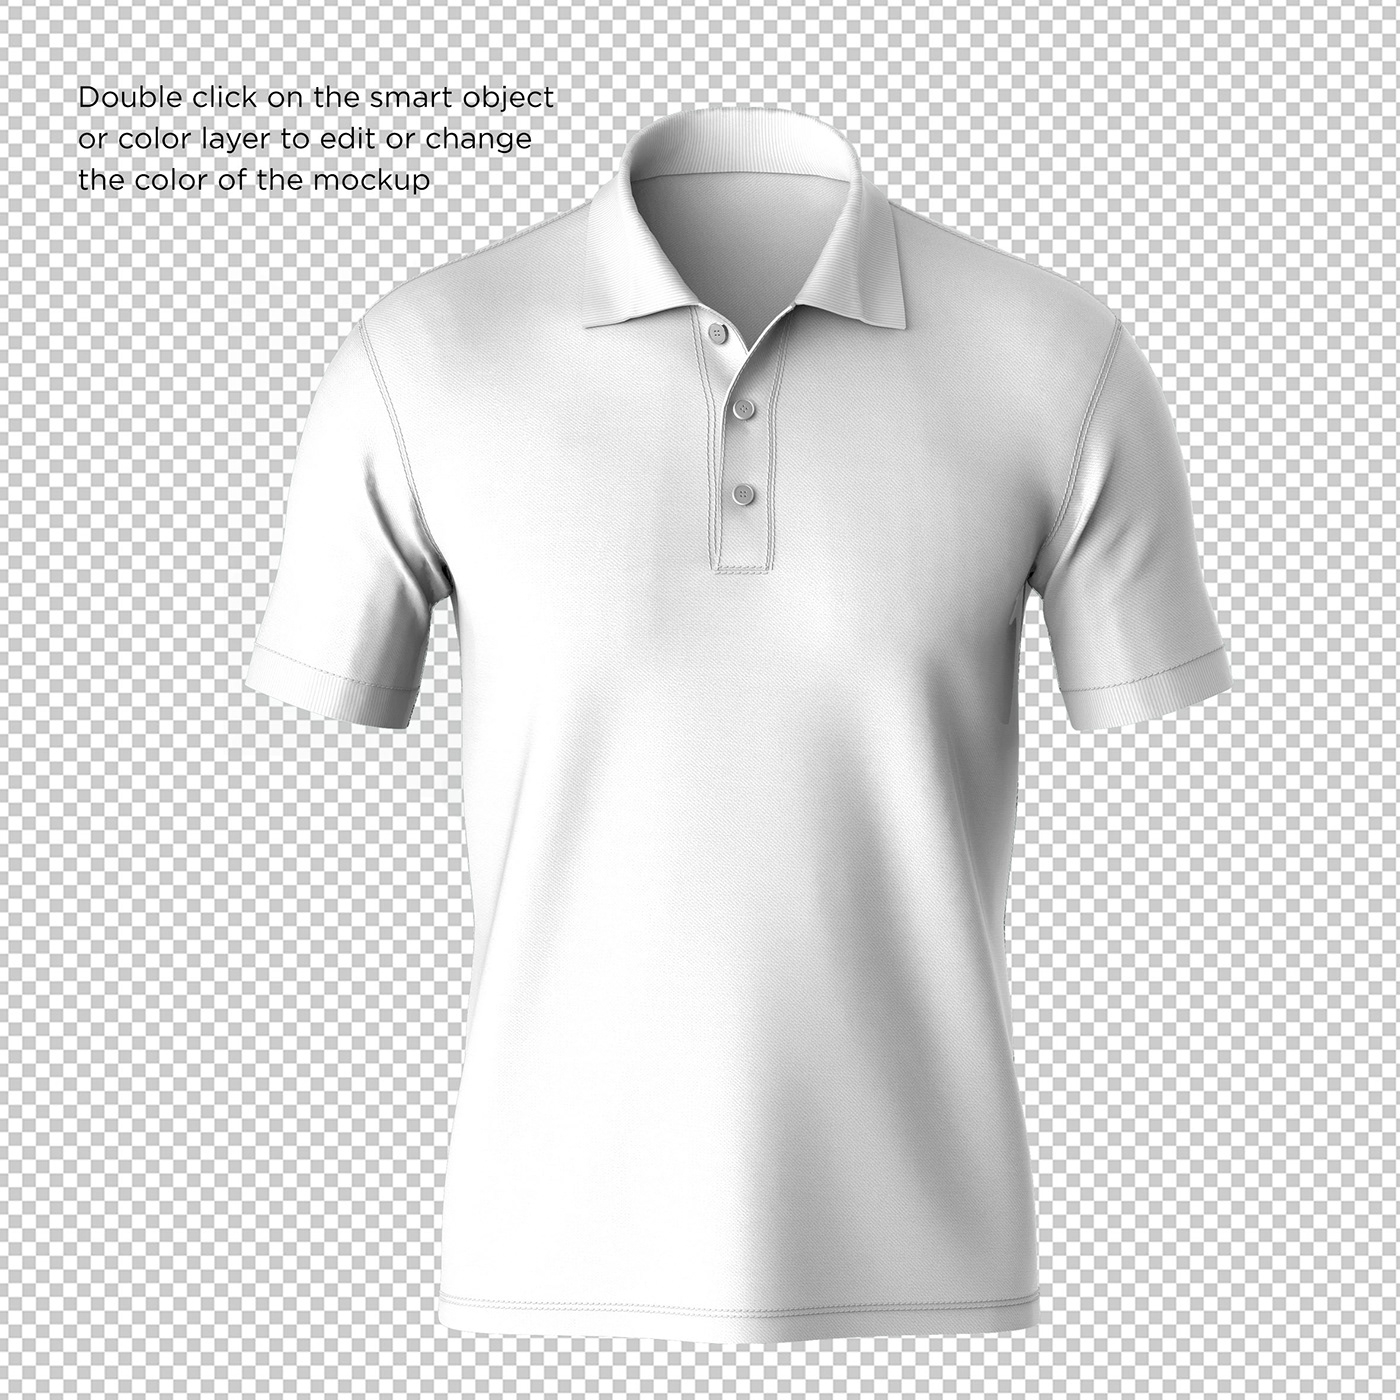 Polo Shirt Mokcup on Behance